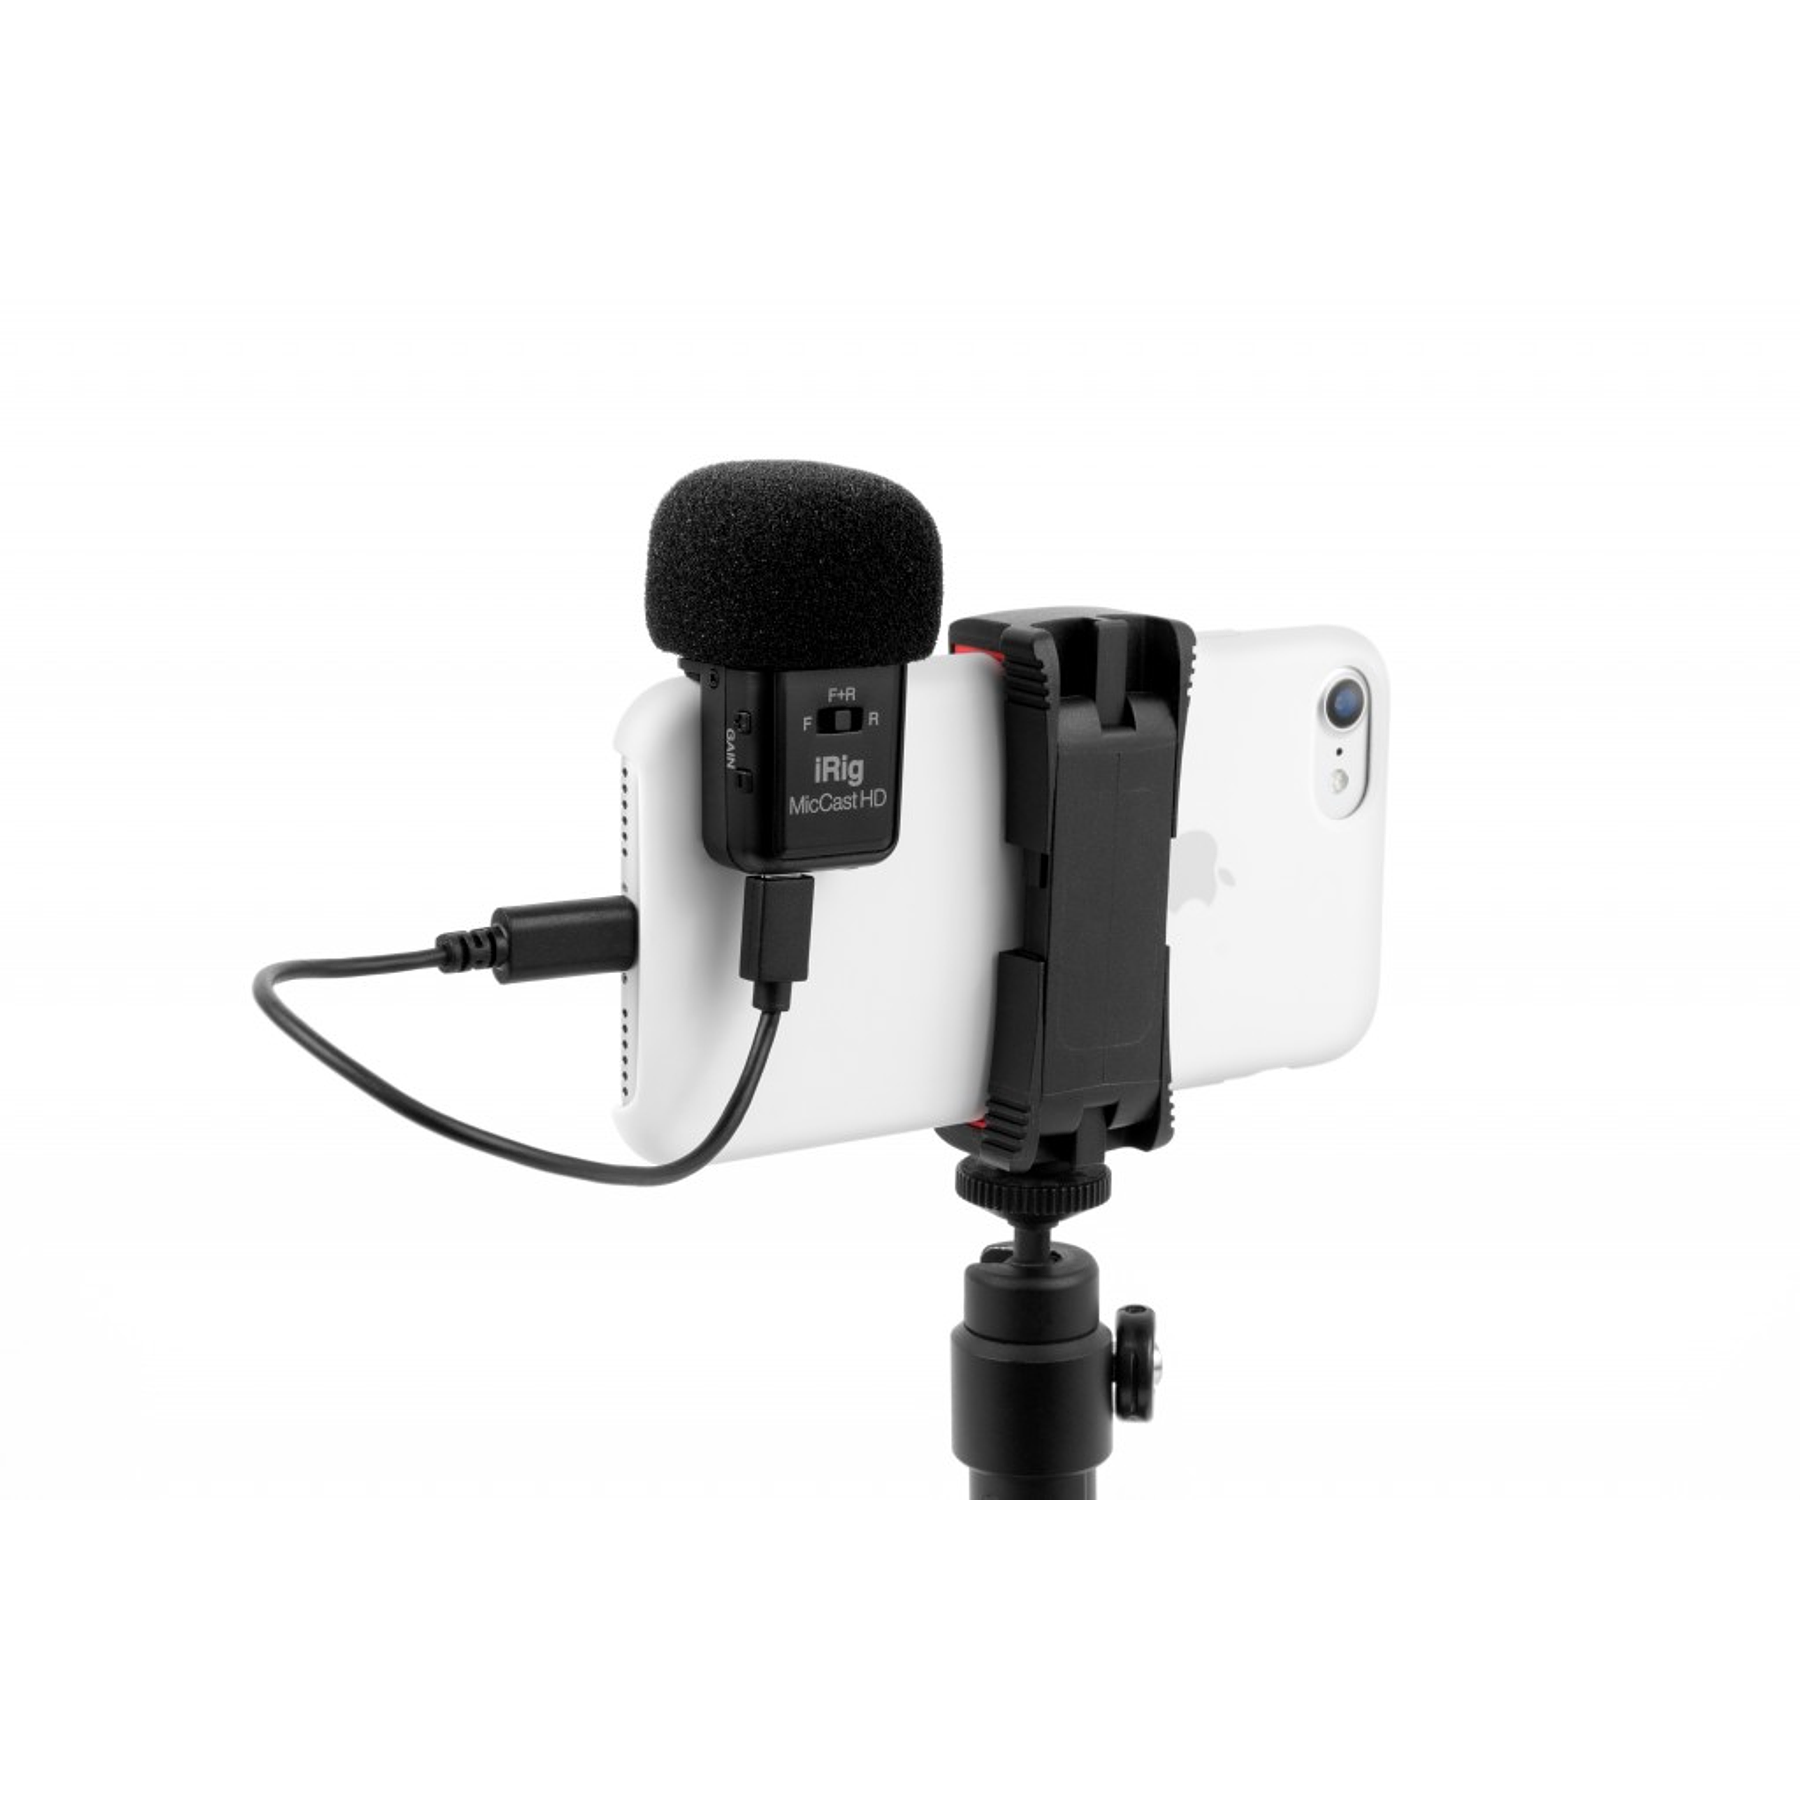 IK Multimedia - Microfone iRig Mic Cast HD